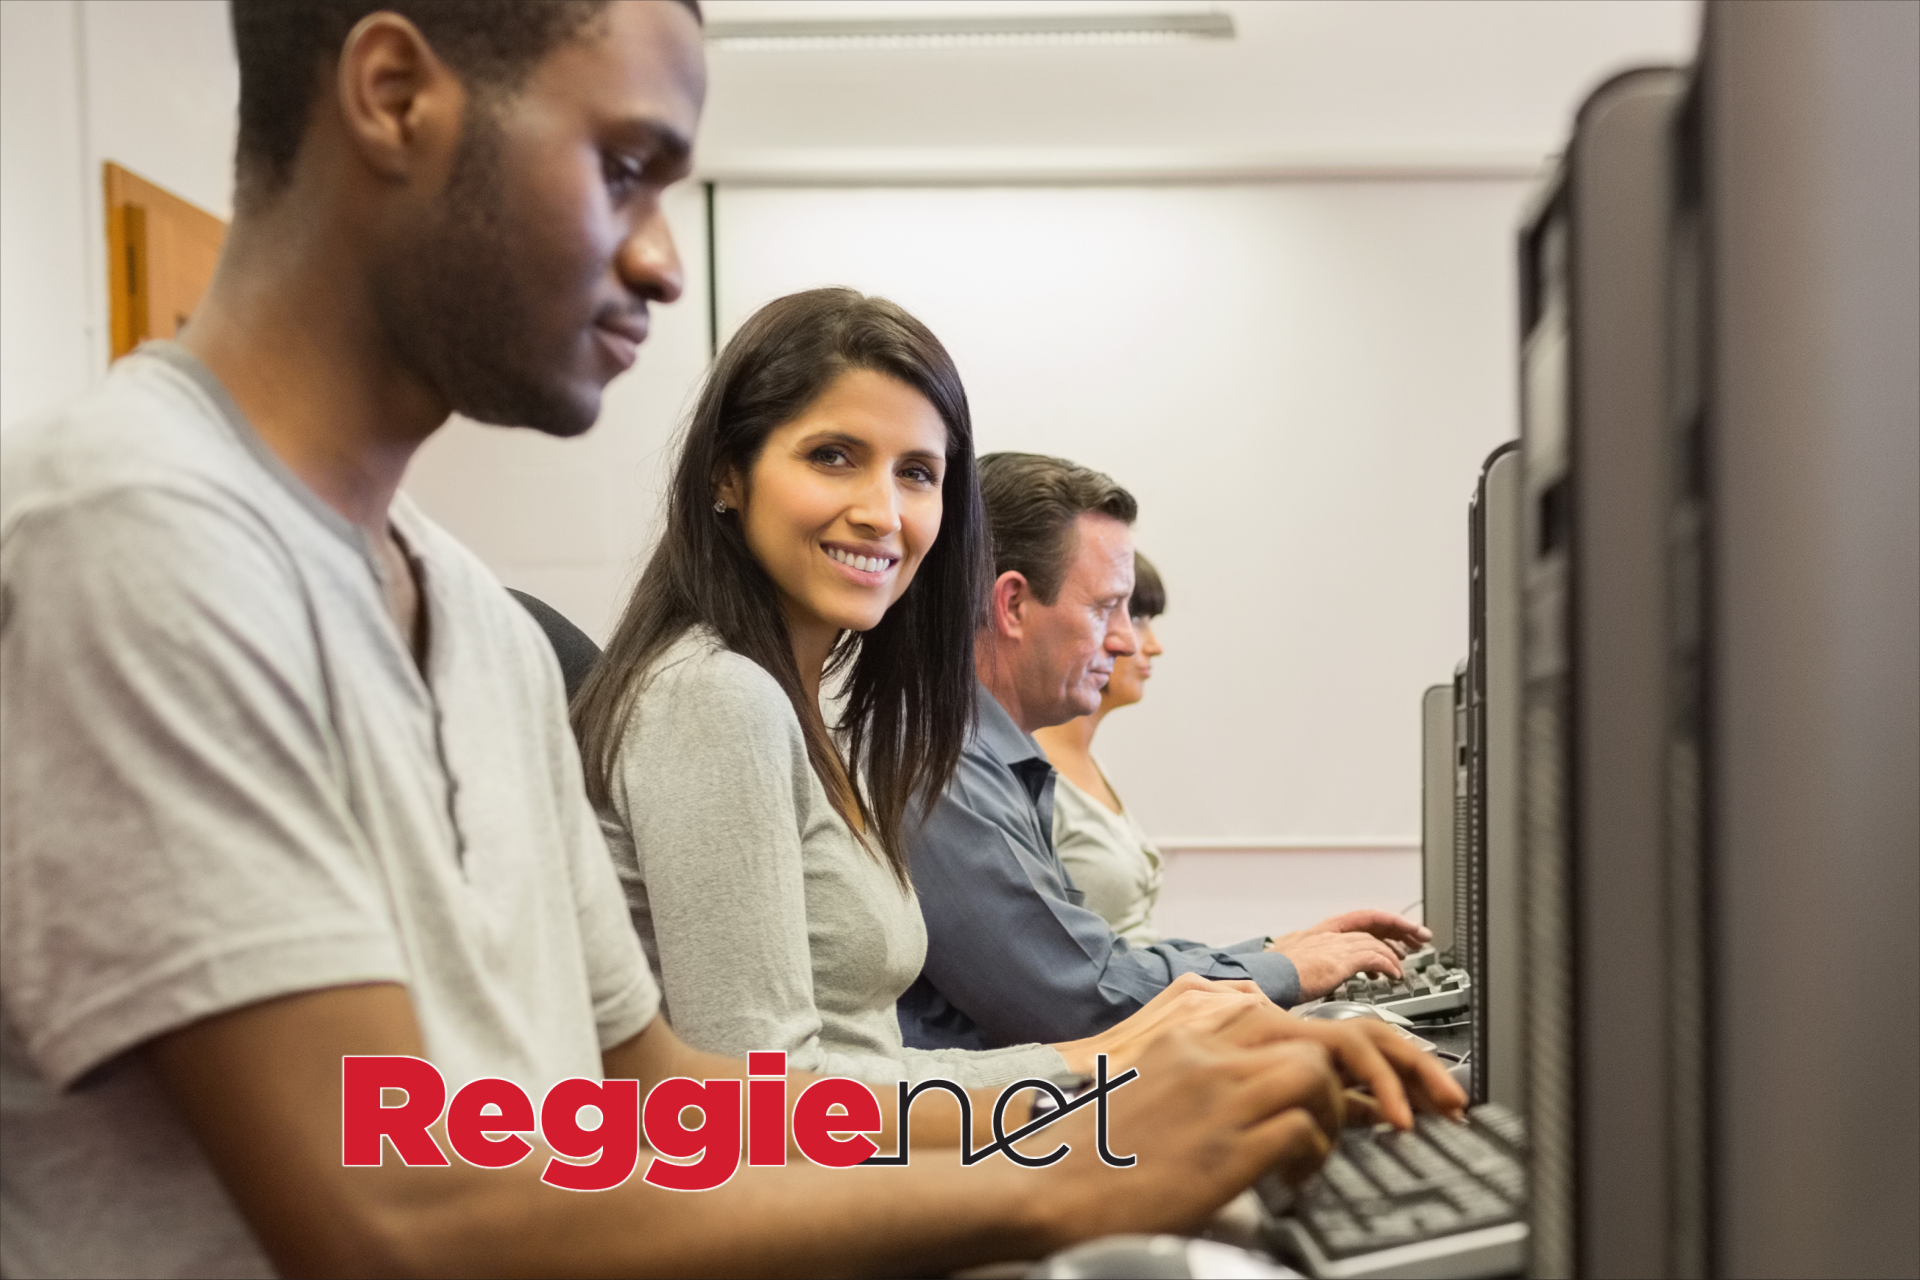 Students using ReggieNet